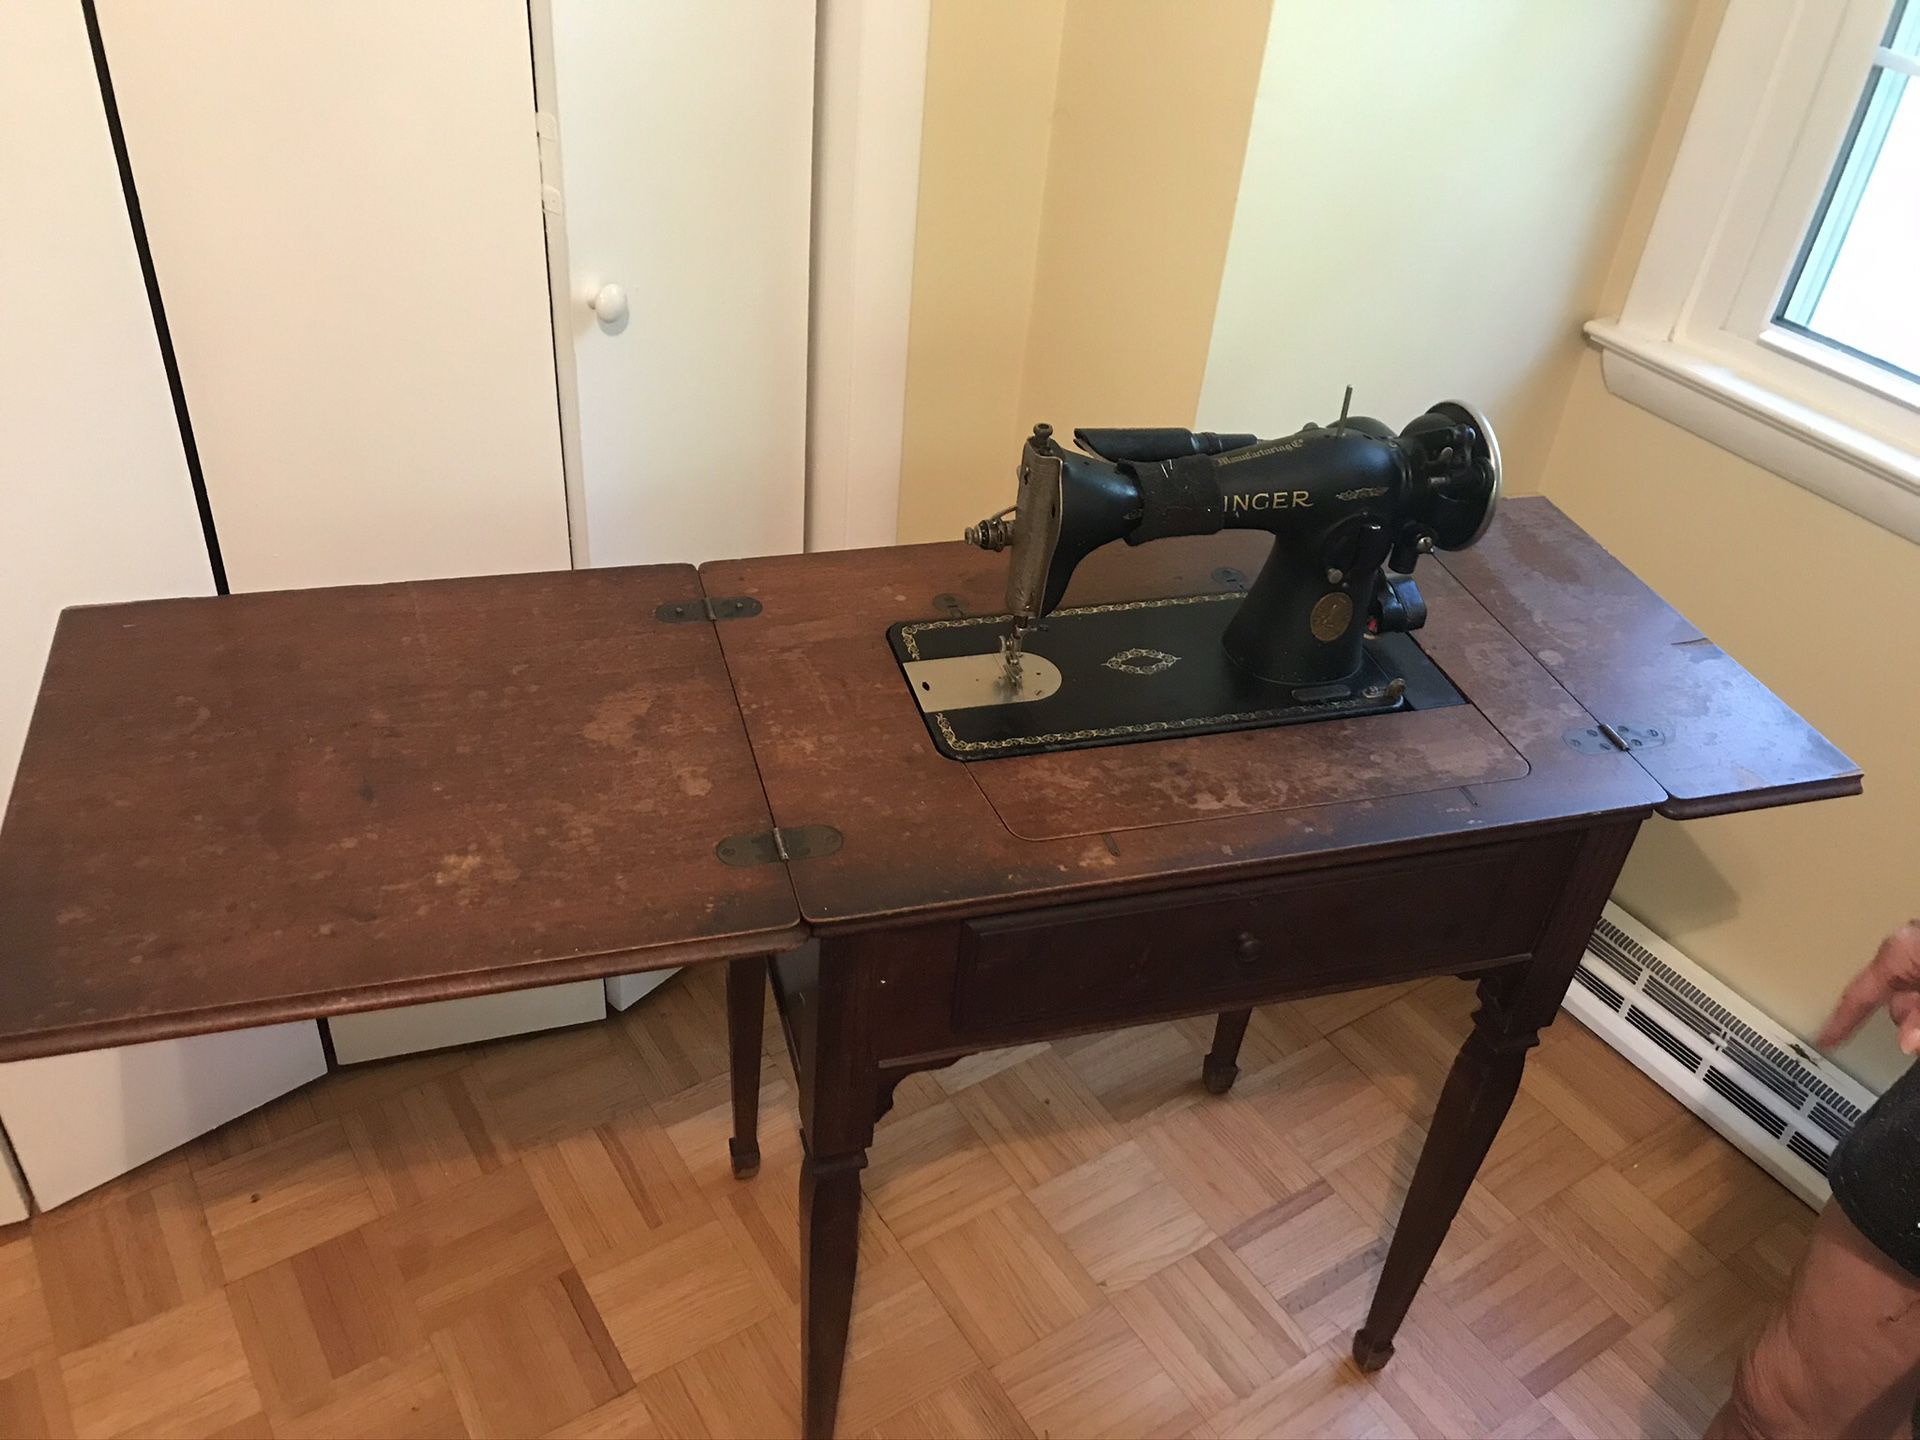 Antique 1940’s era sewing machine